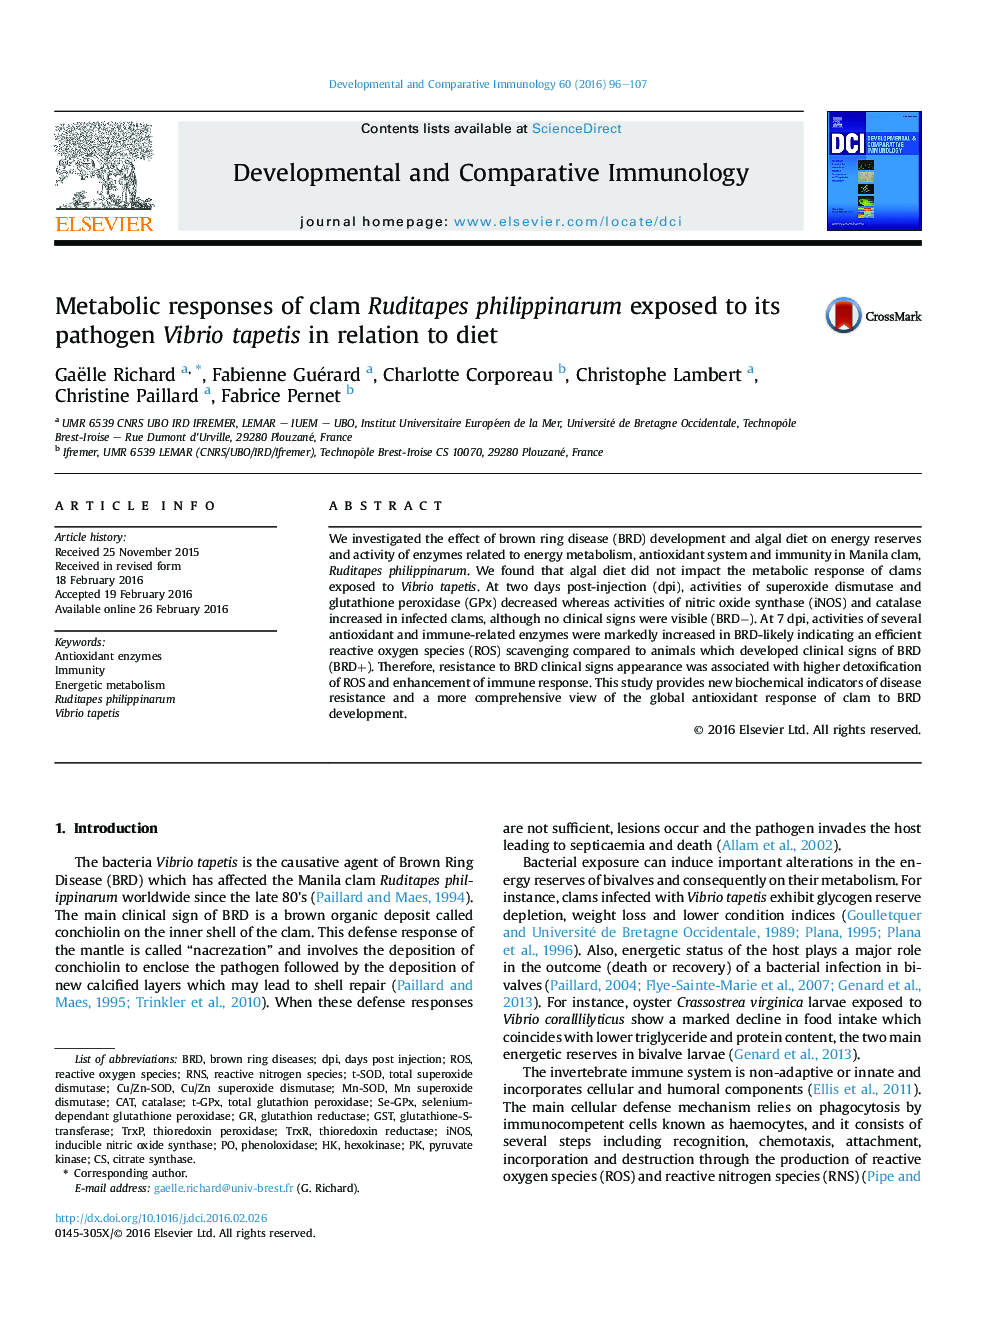 Metabolic responses of clam Ruditapes philippinarum exposed to its pathogen Vibrio tapetis in relation to diet